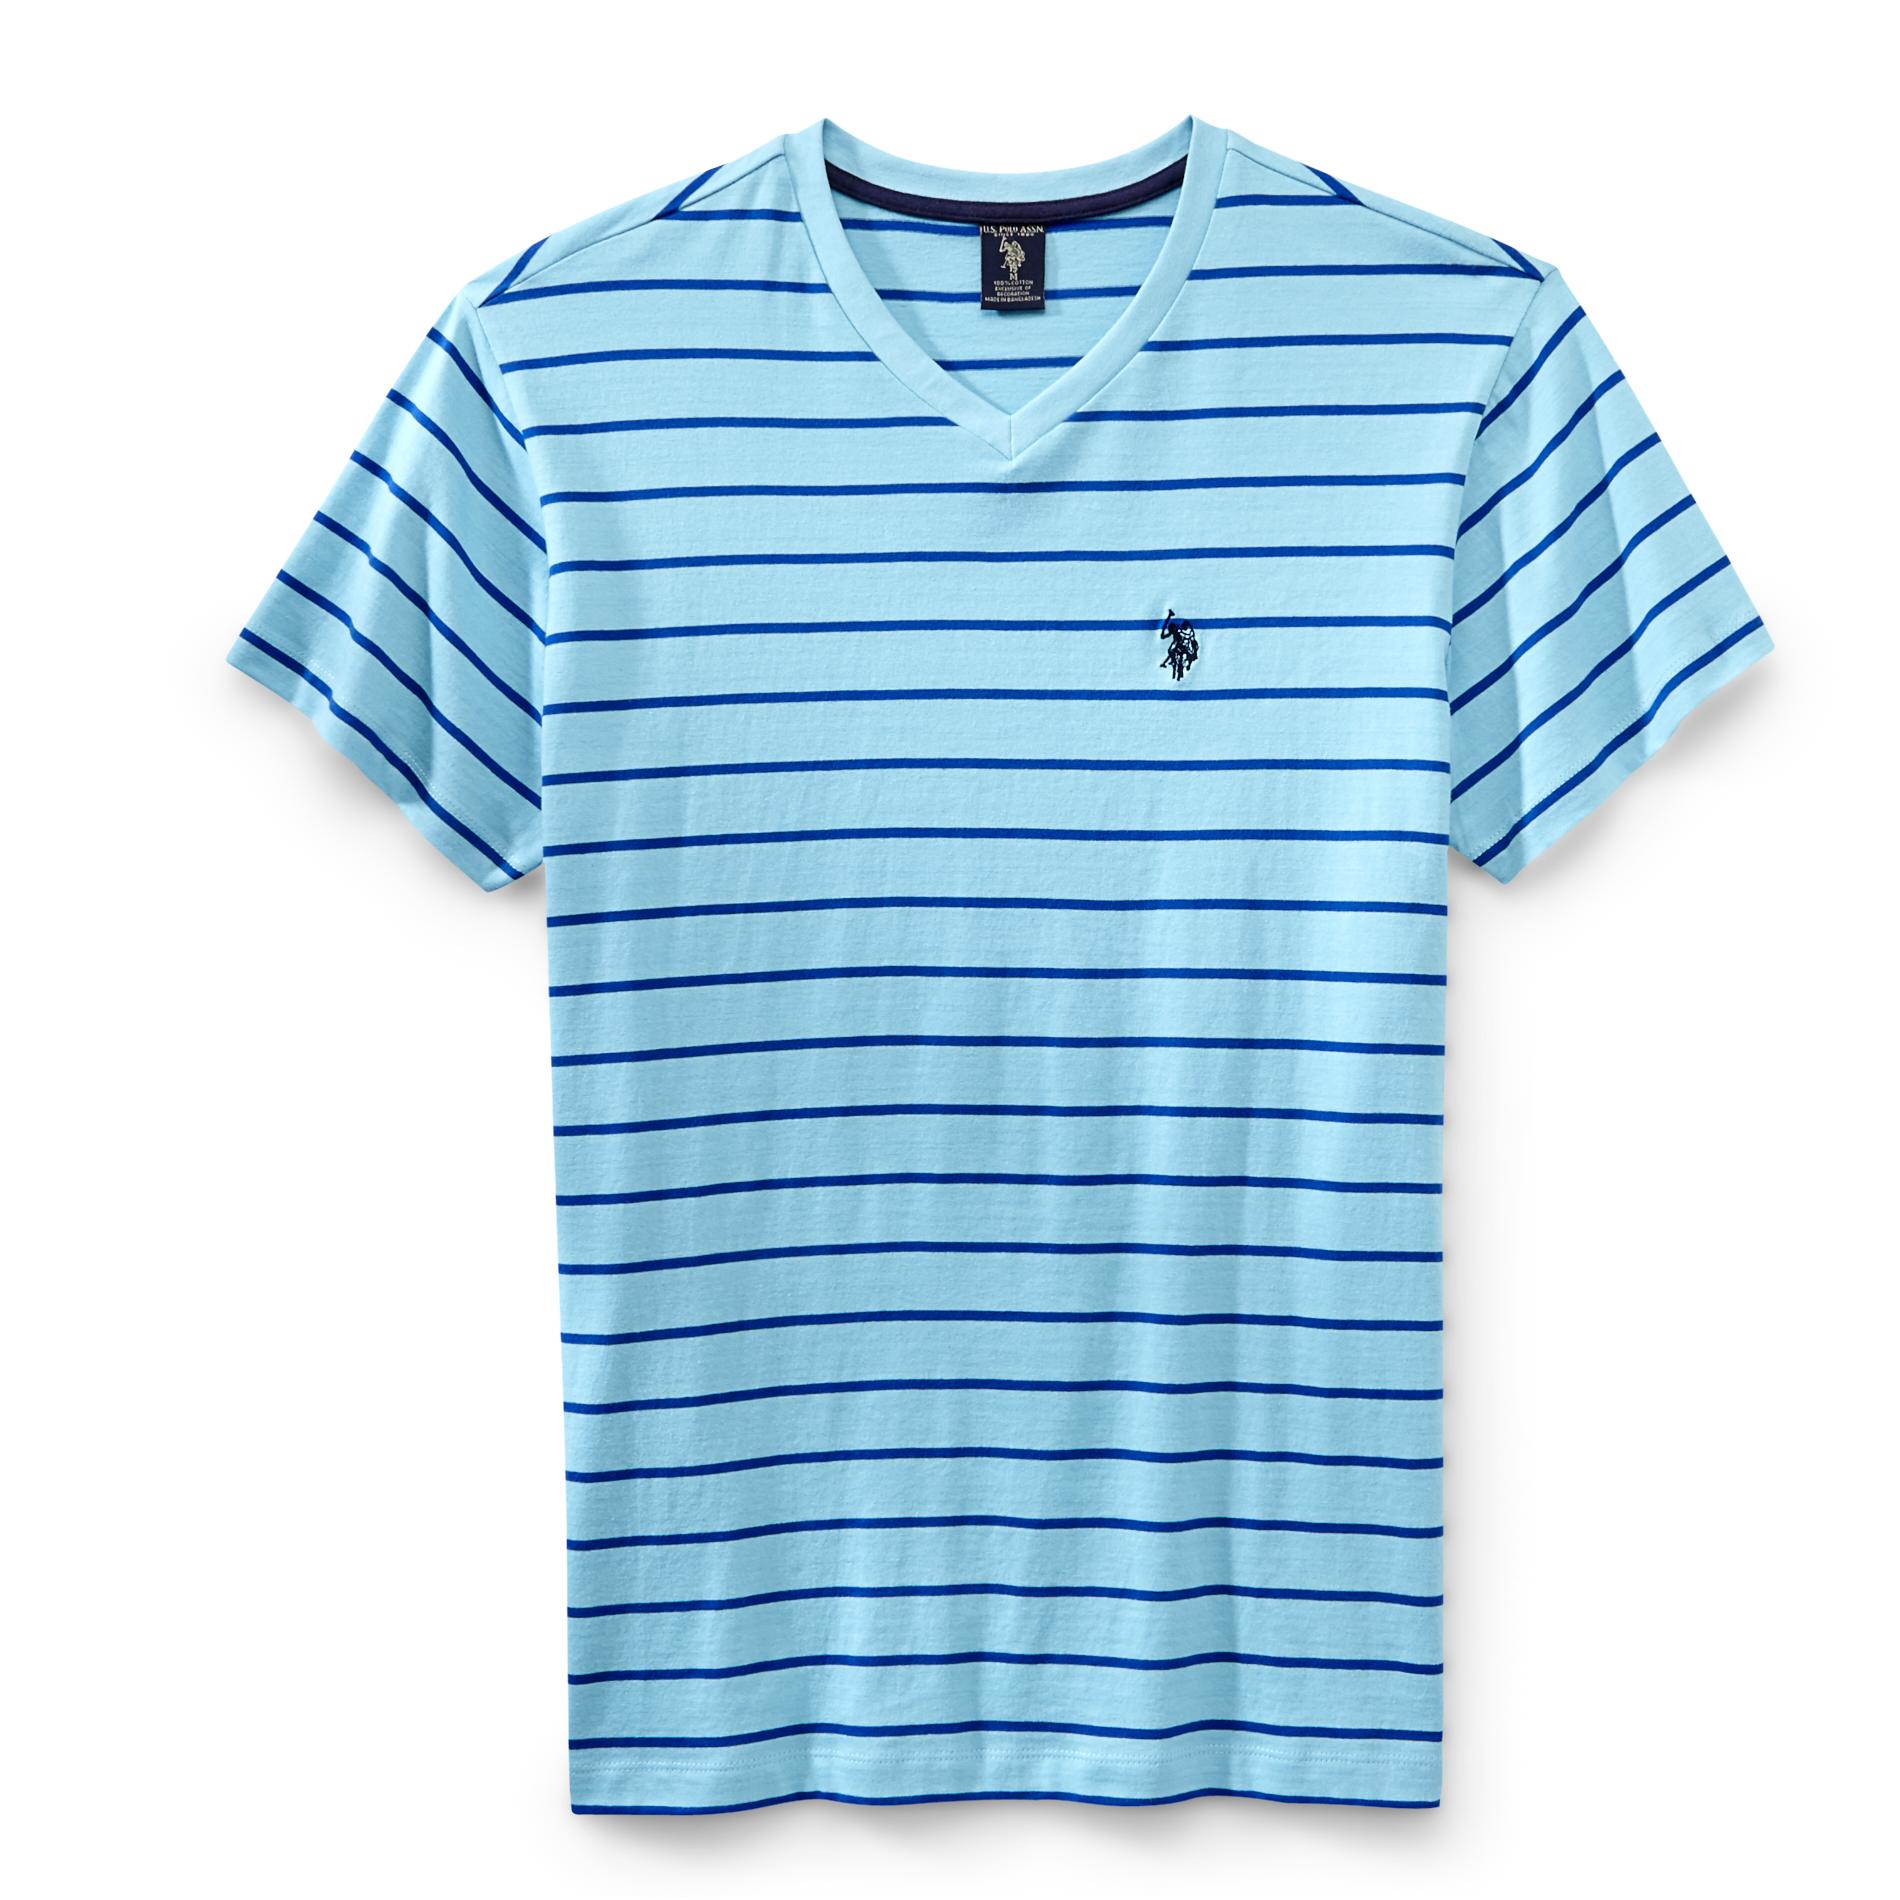 U.S. Polo Assn. Men's V-Neck T-Shirt - Pencil Striped